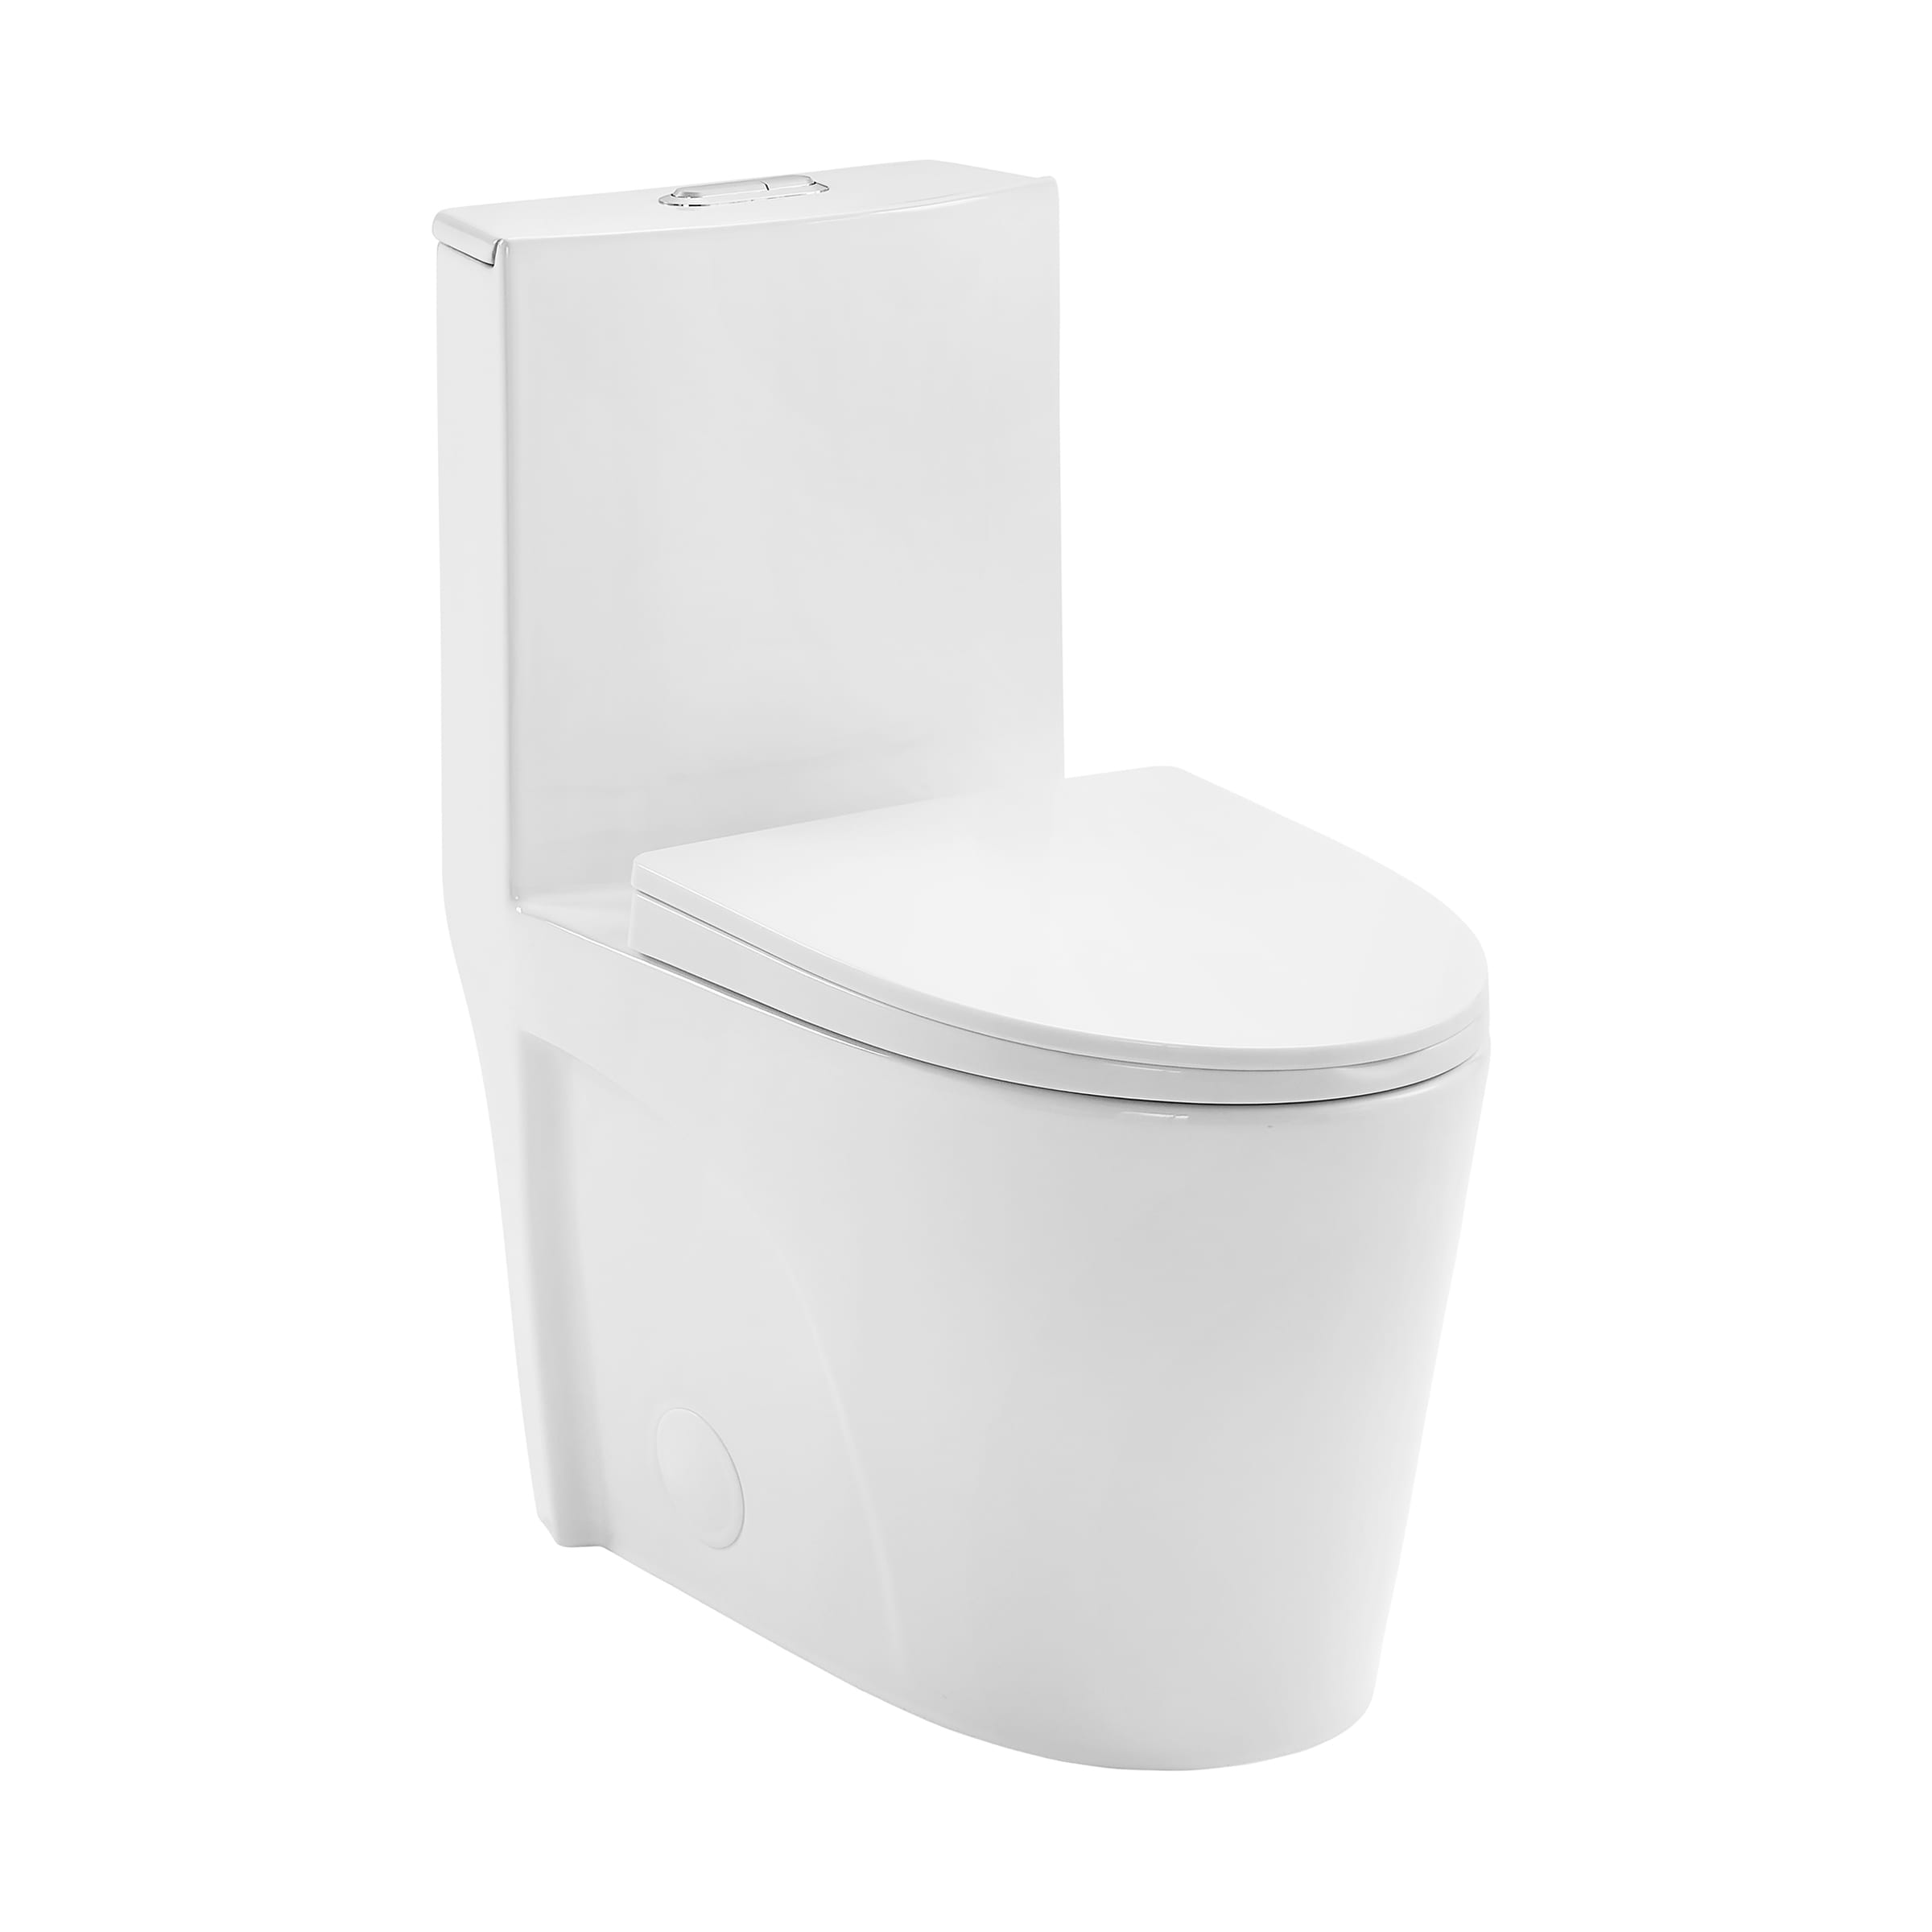 White Modern Toilet Ceramic Bathroom Close Coupled Pan Cistern Soft Close Seat